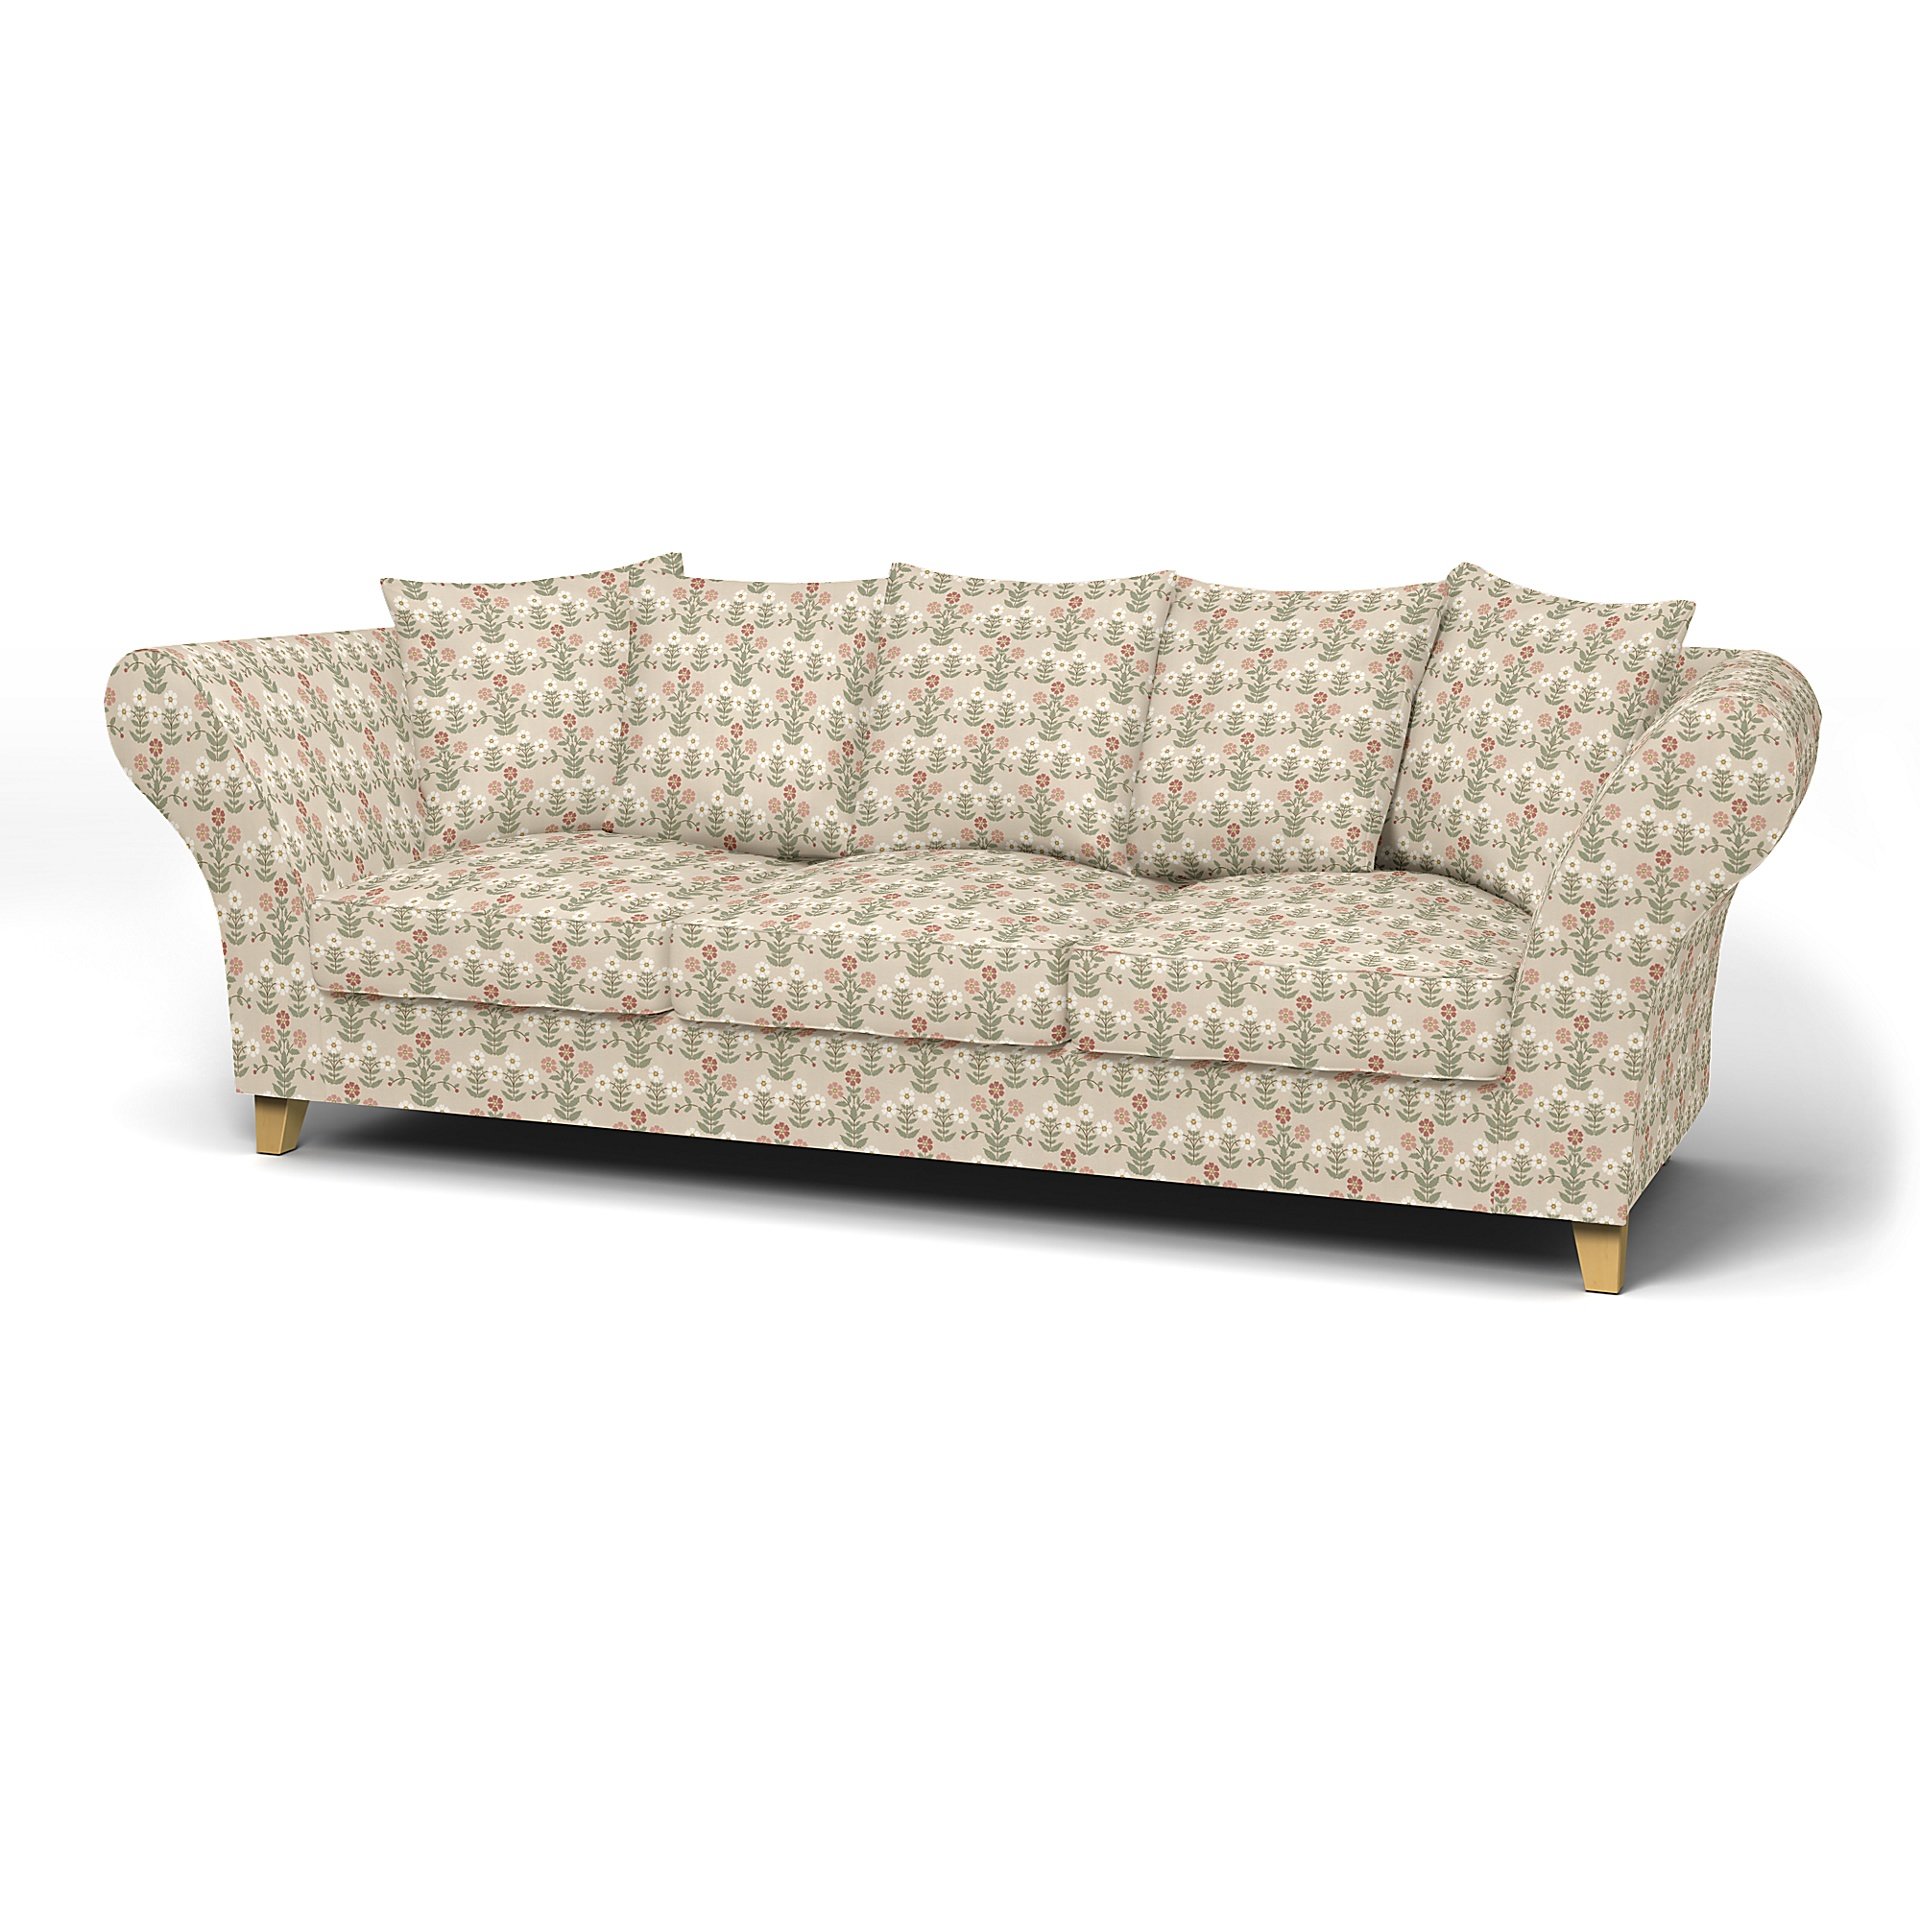 IKEA - Backa 3.5 Seater Sofa Cover, Pink Sippor, BEMZ x BORASTAPETER COLLECTION - Bemz